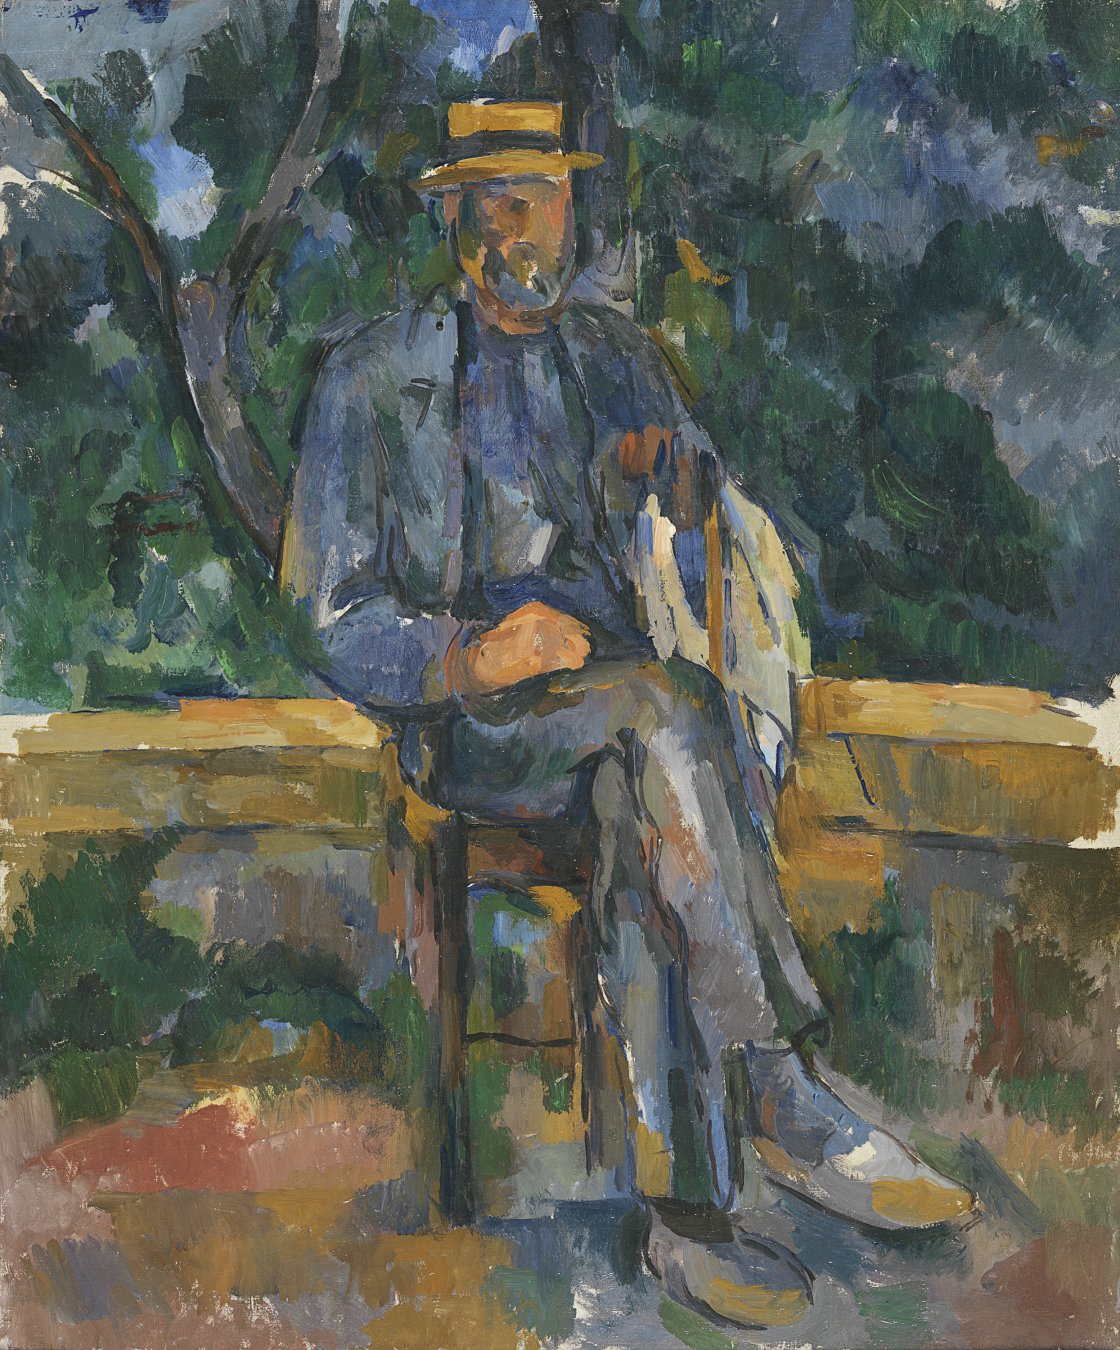 Seated Man, 1905-1906